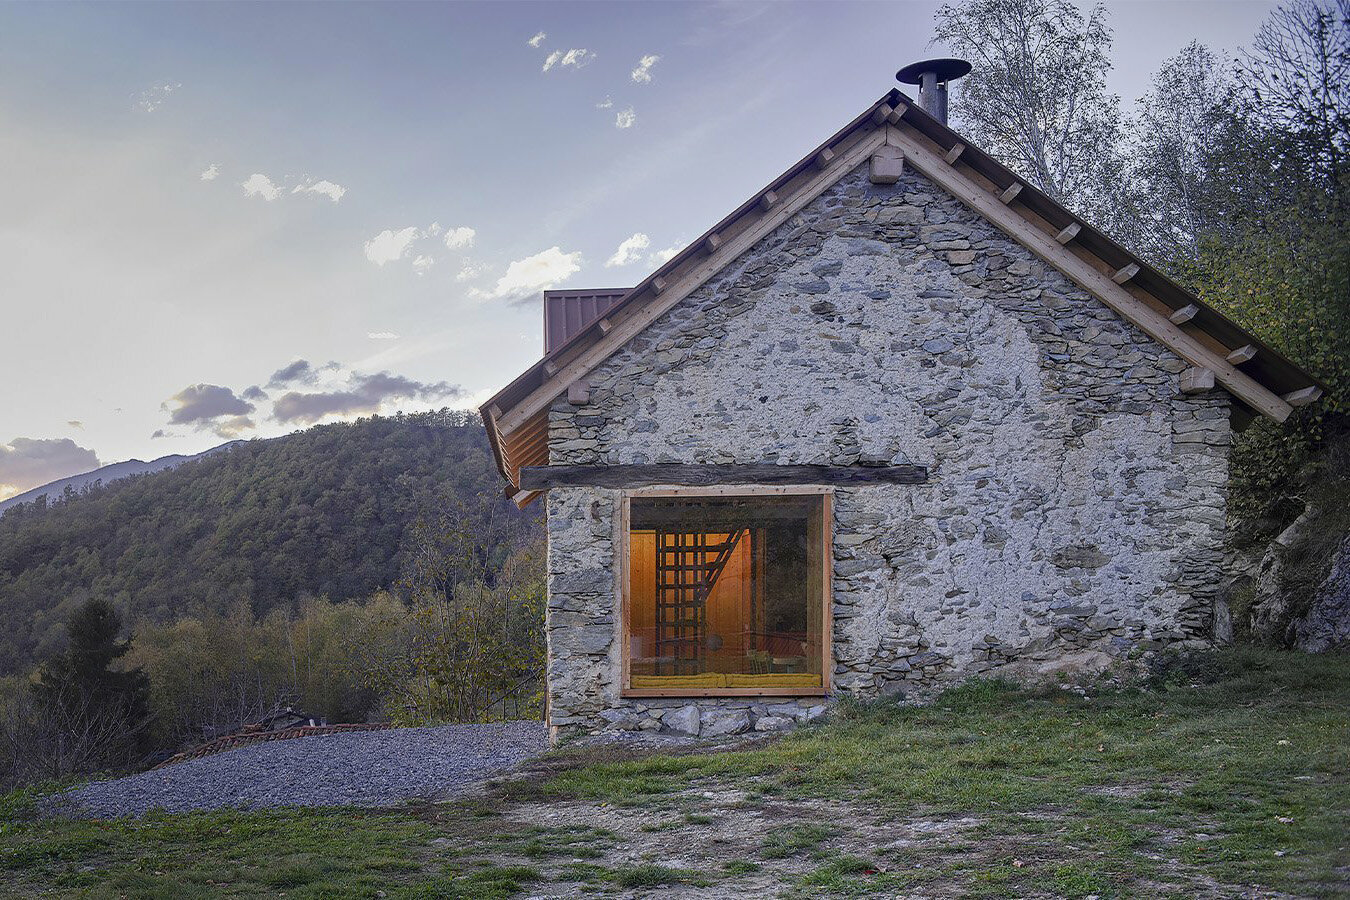 Как старый амбар стал уютным домом: фотопост из Альп 